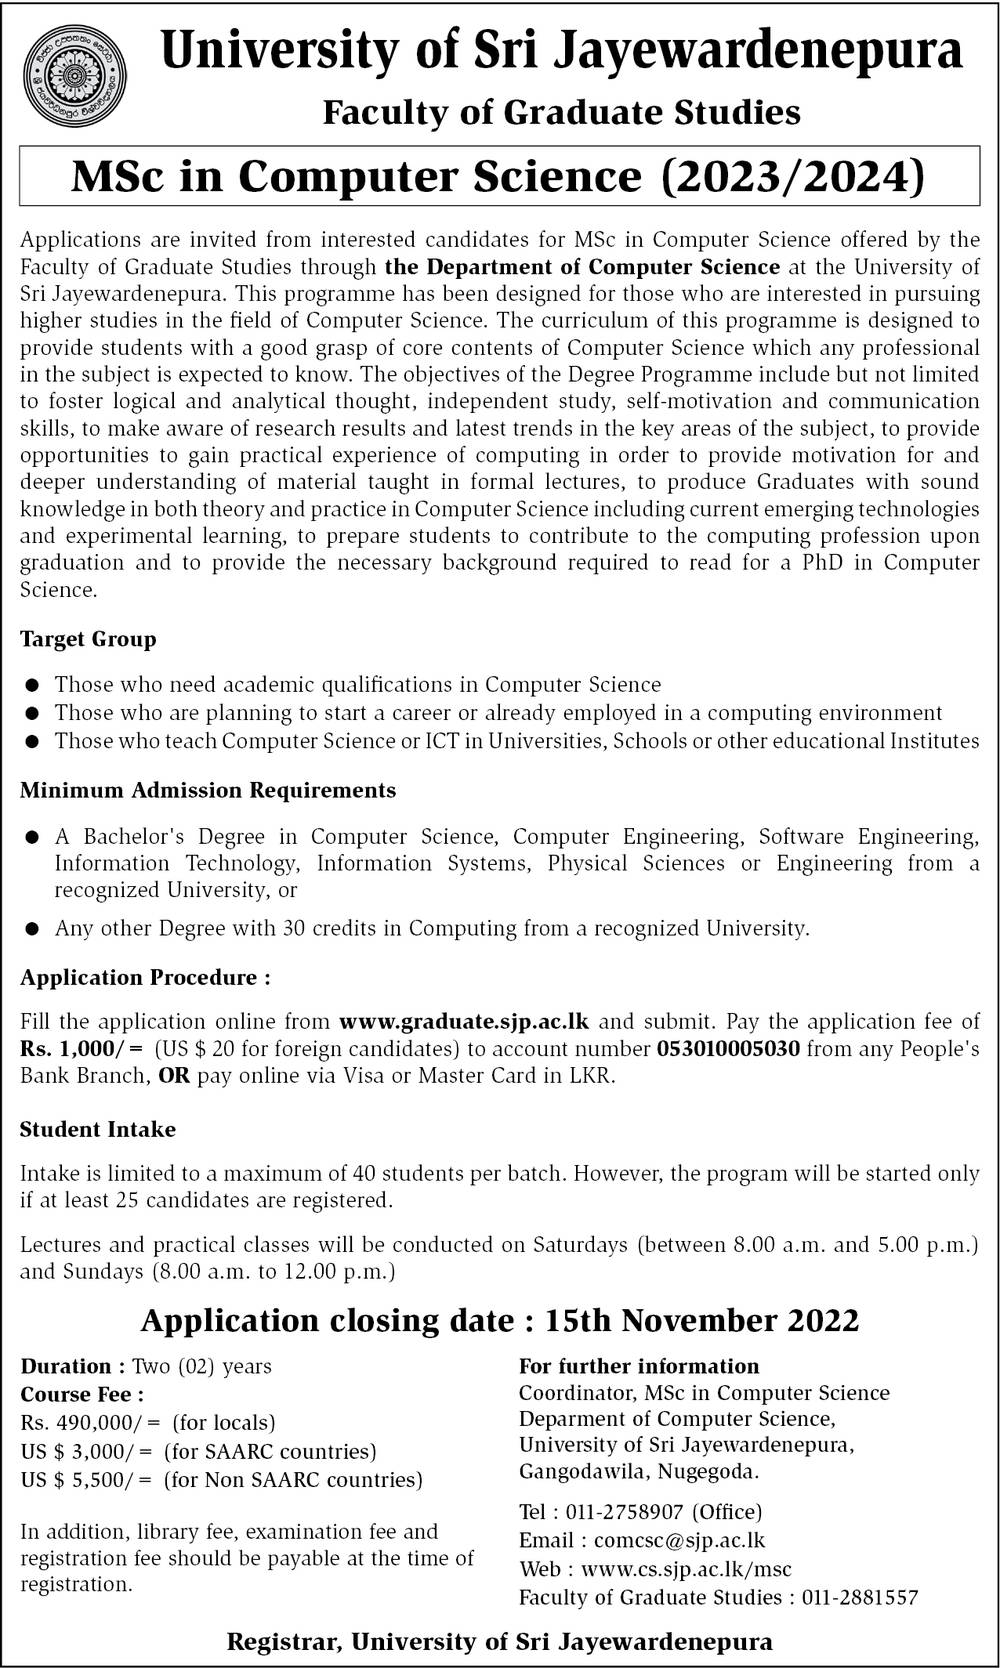 Calling Applications for MSc in Computer Science (2023/2024) - University of Sri Jayewardenepura